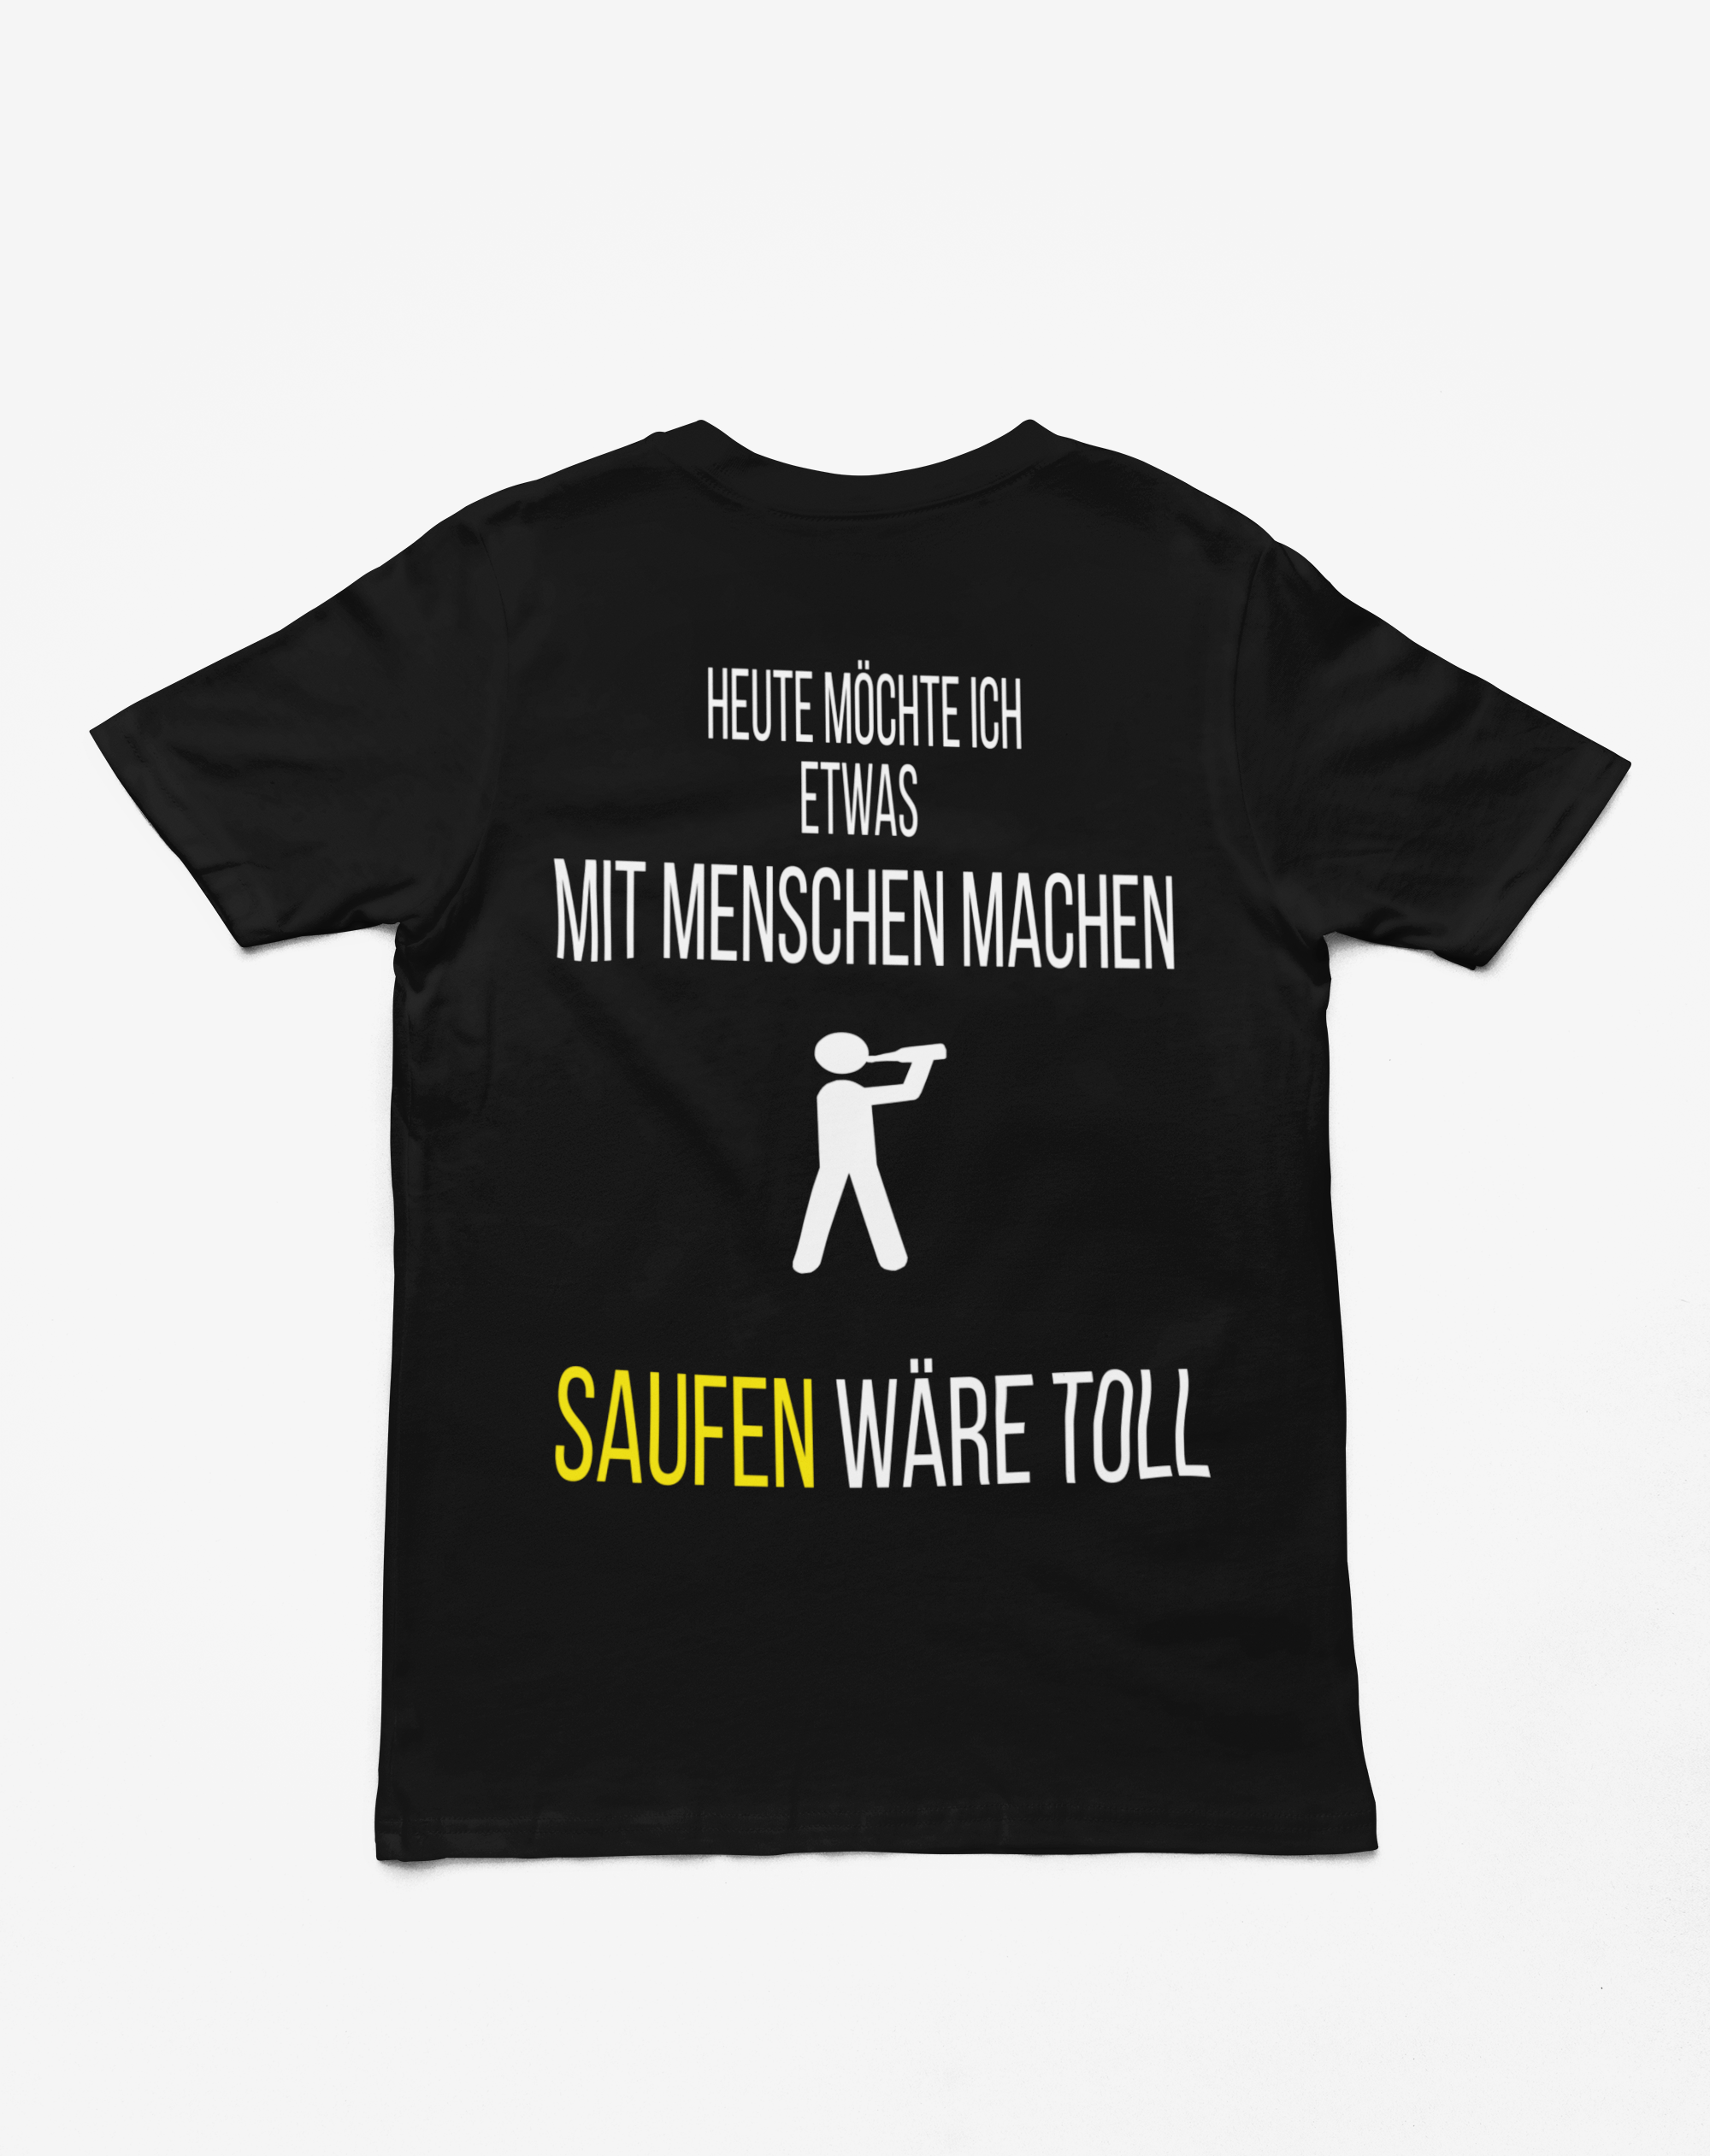 "Saufen wäre toll" T-Shirt